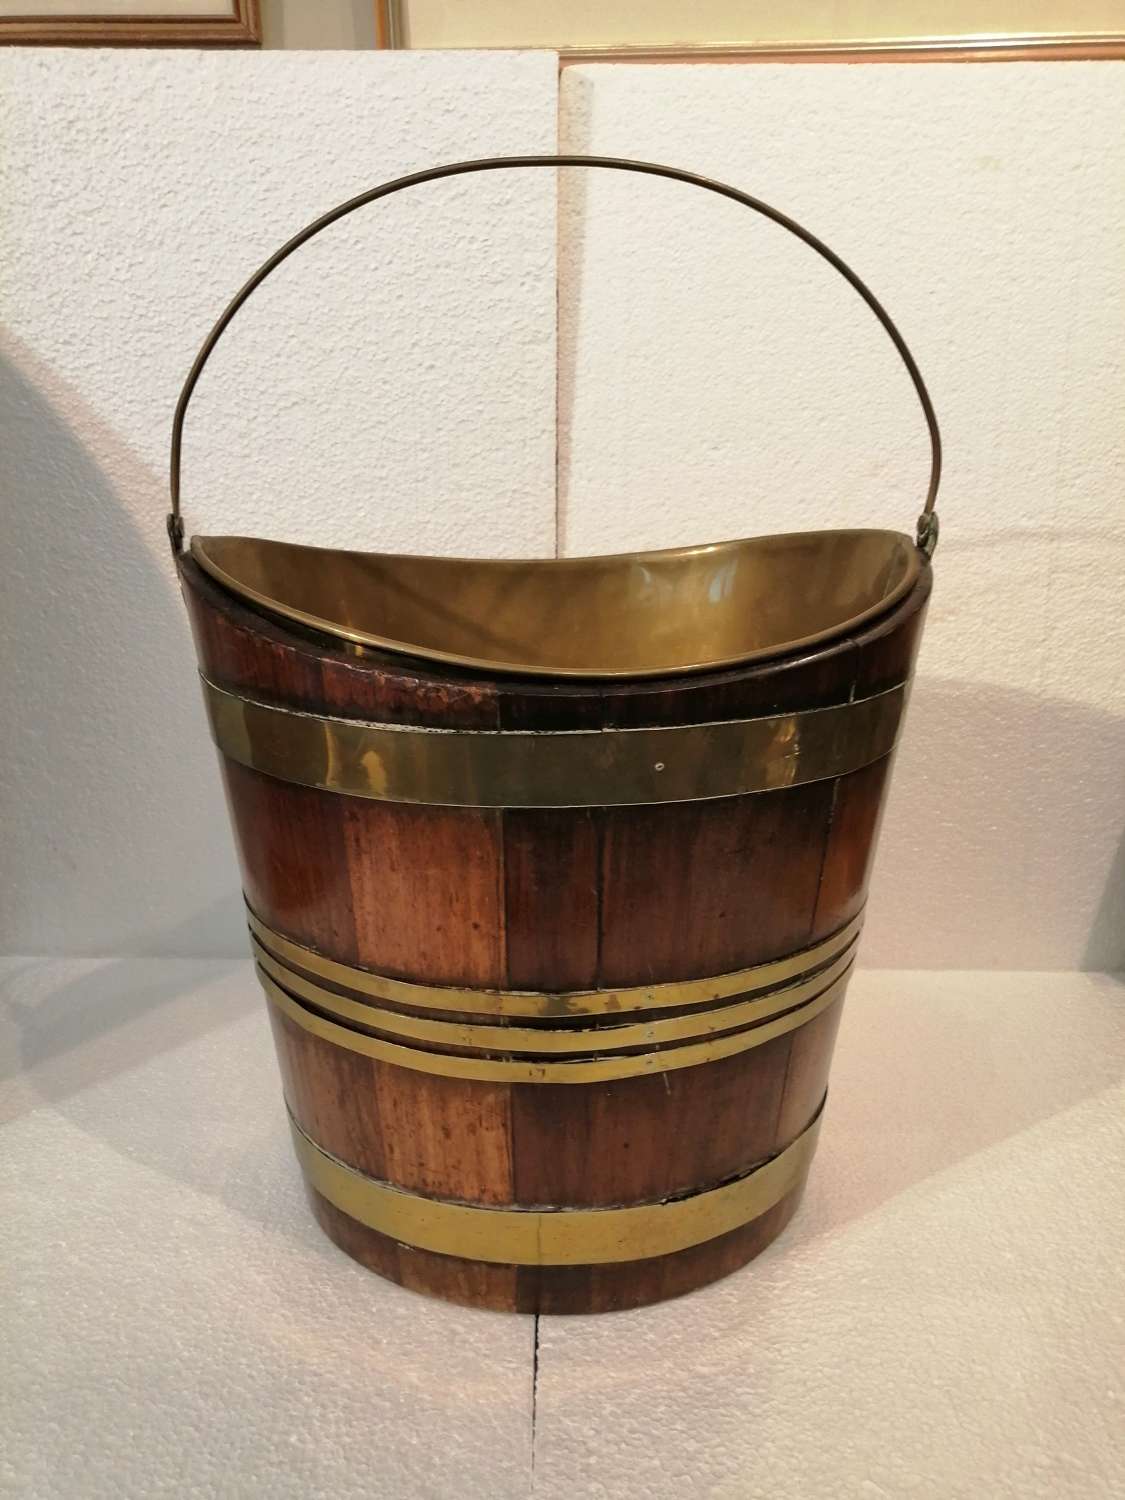 A fine quality Dutch mahogany Teestoof bucket